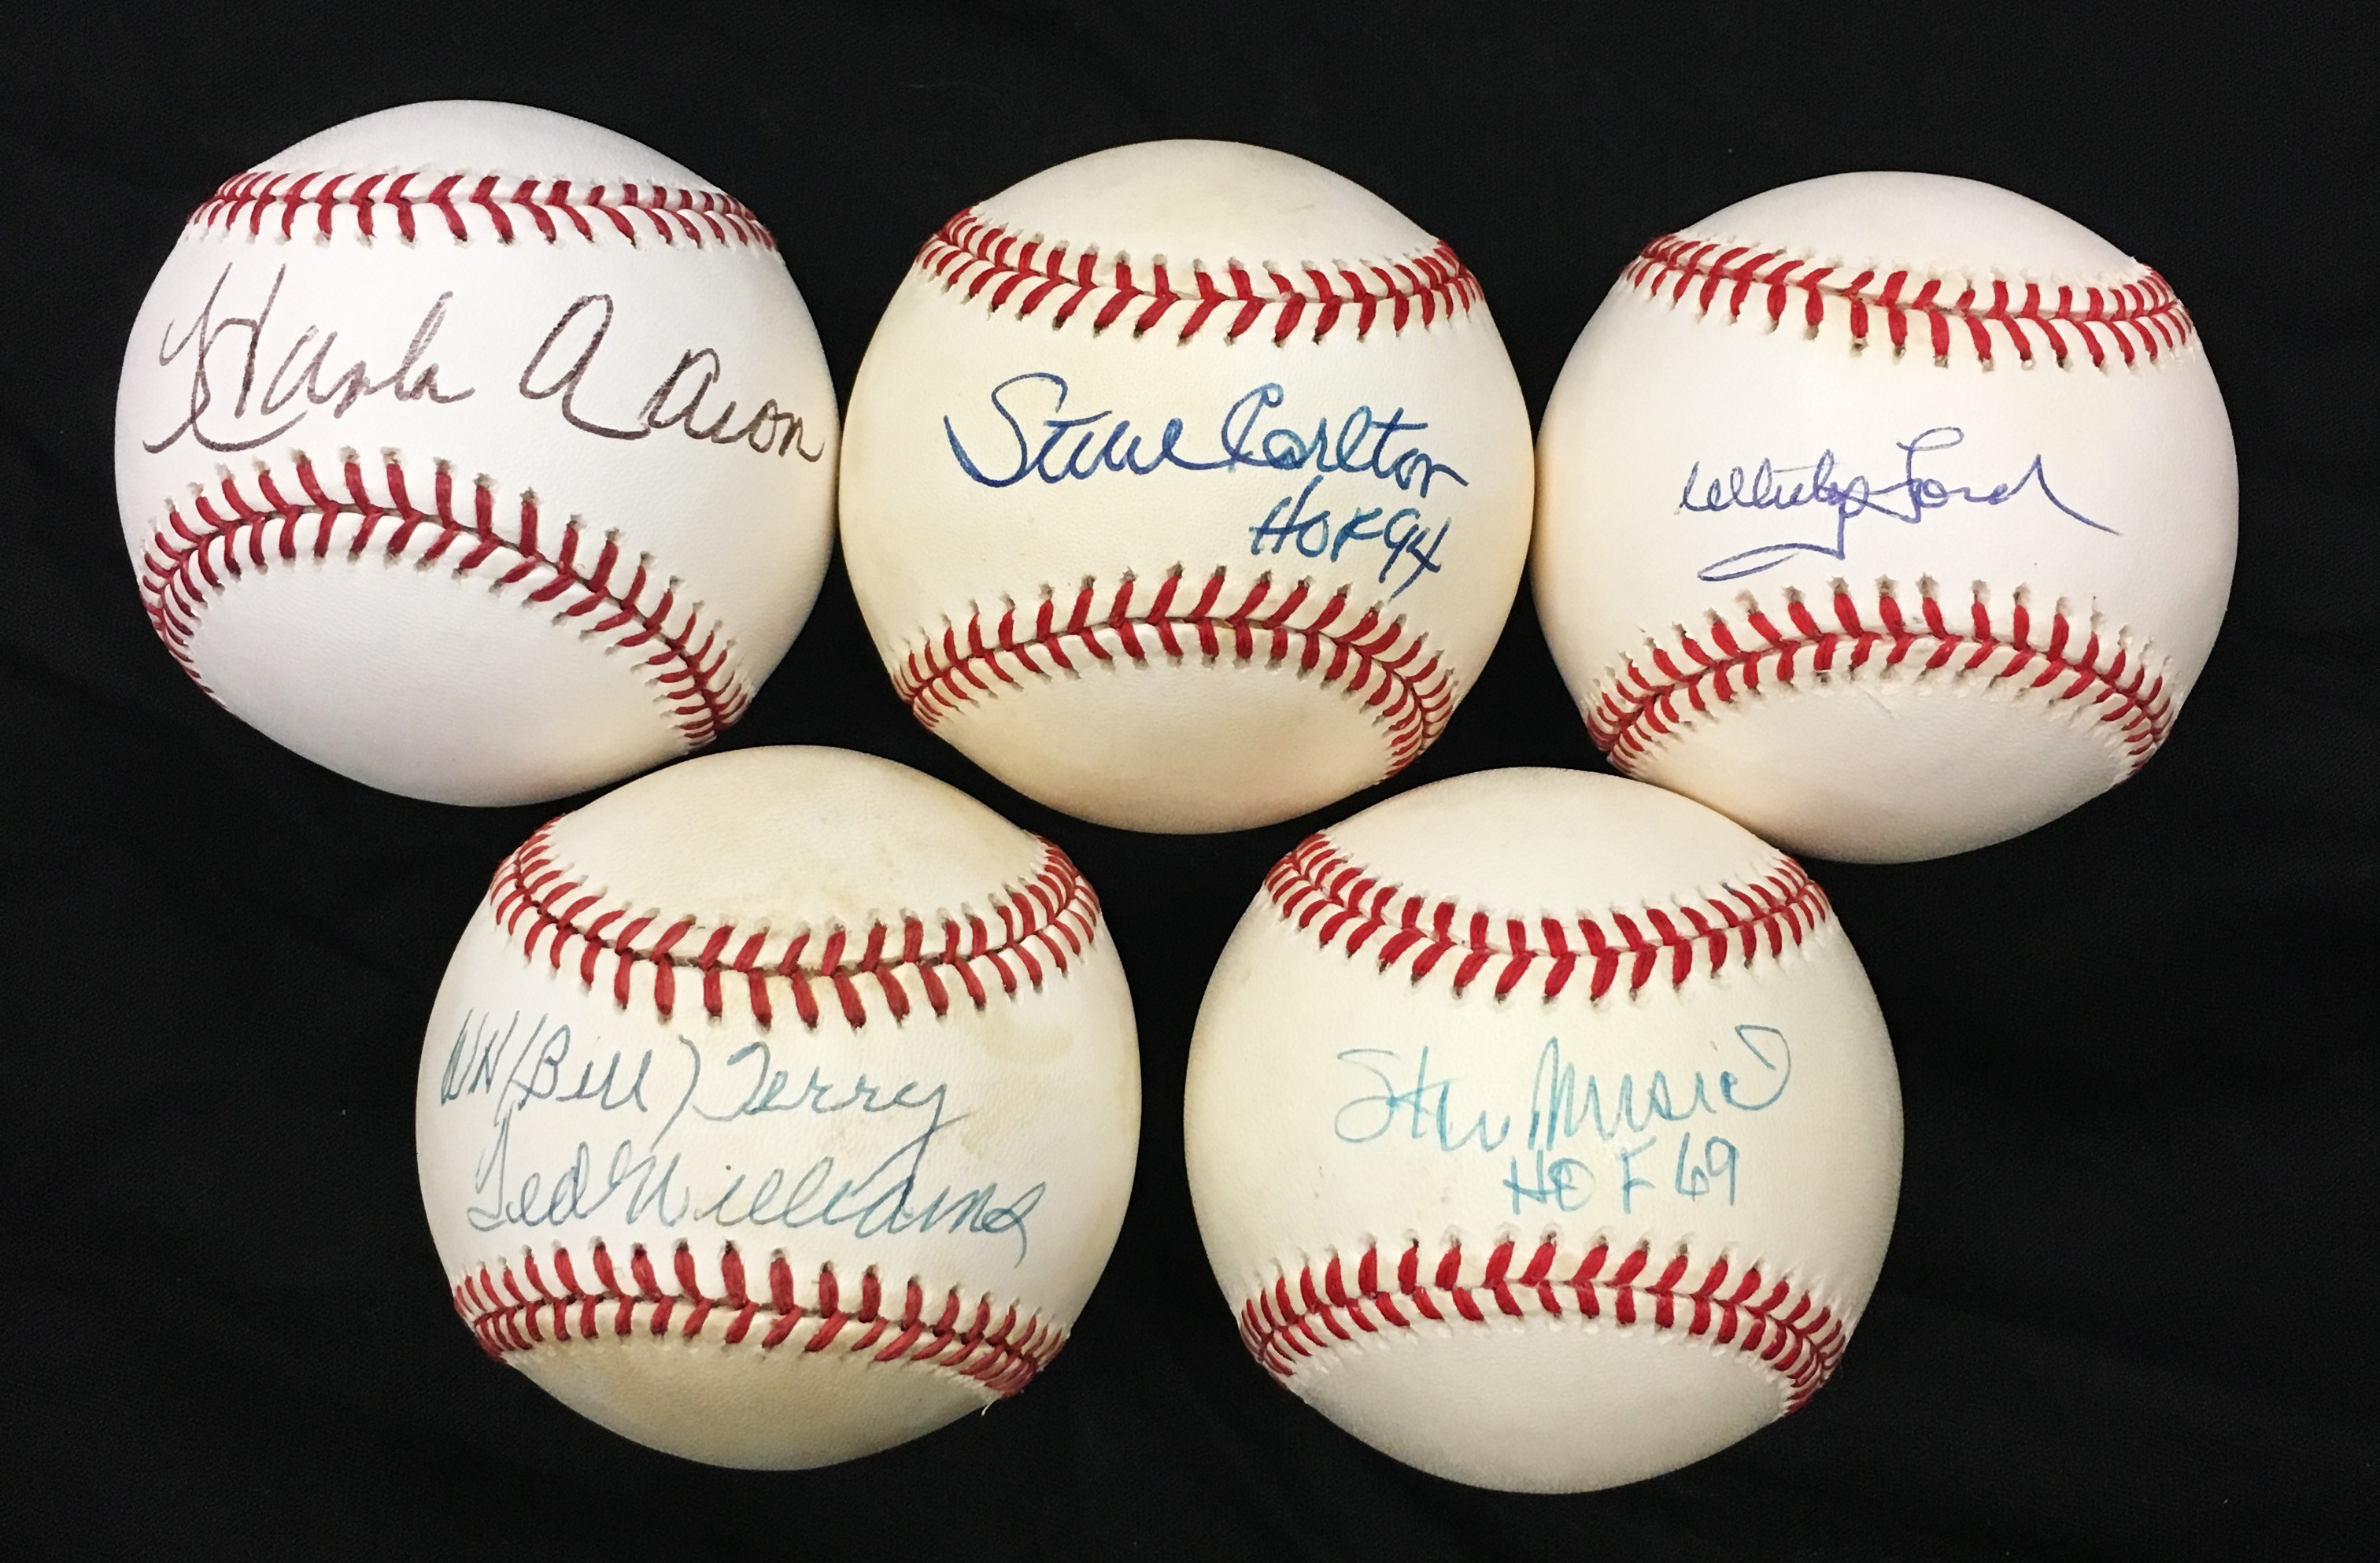 Hall of Fame Legends Signed Baseballs w/Ted Williams (5)